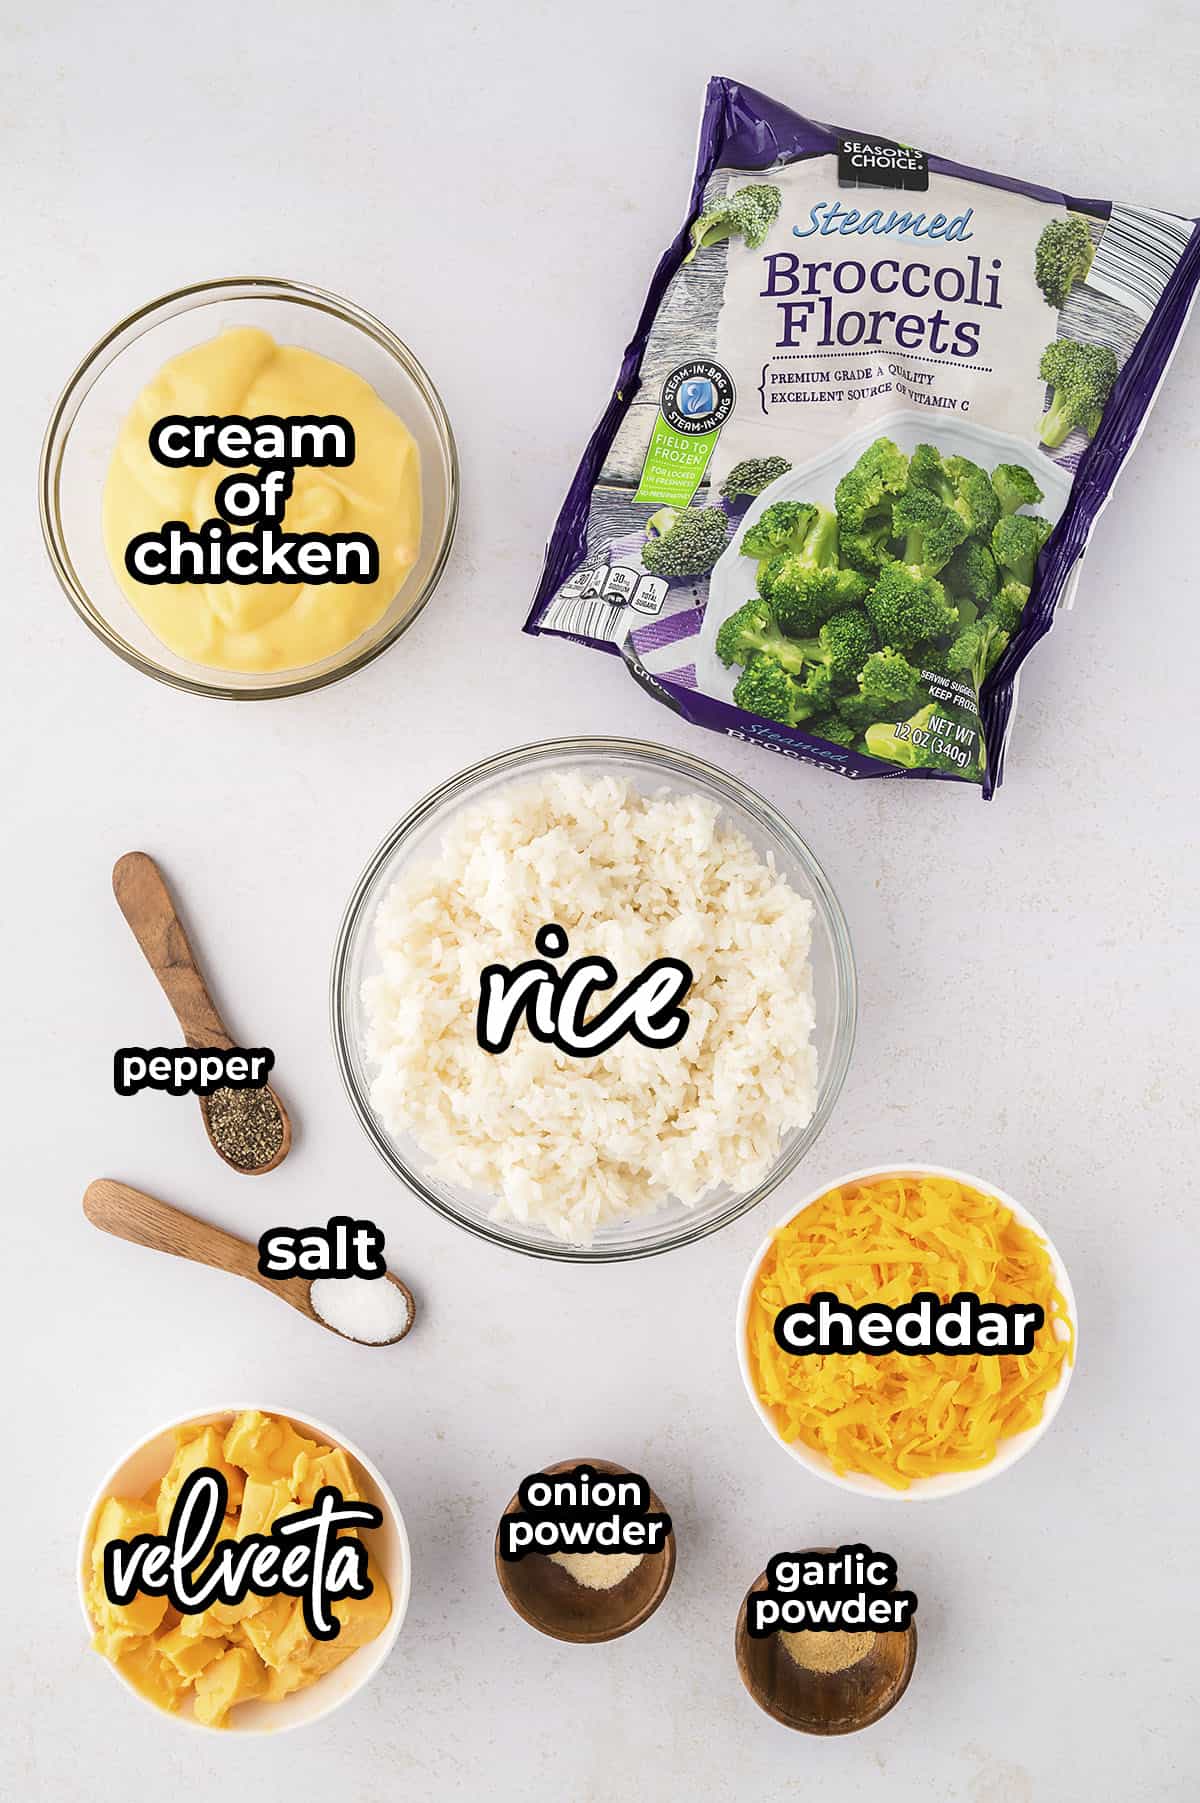 Ingredients for broccoli rice casserole recipe.